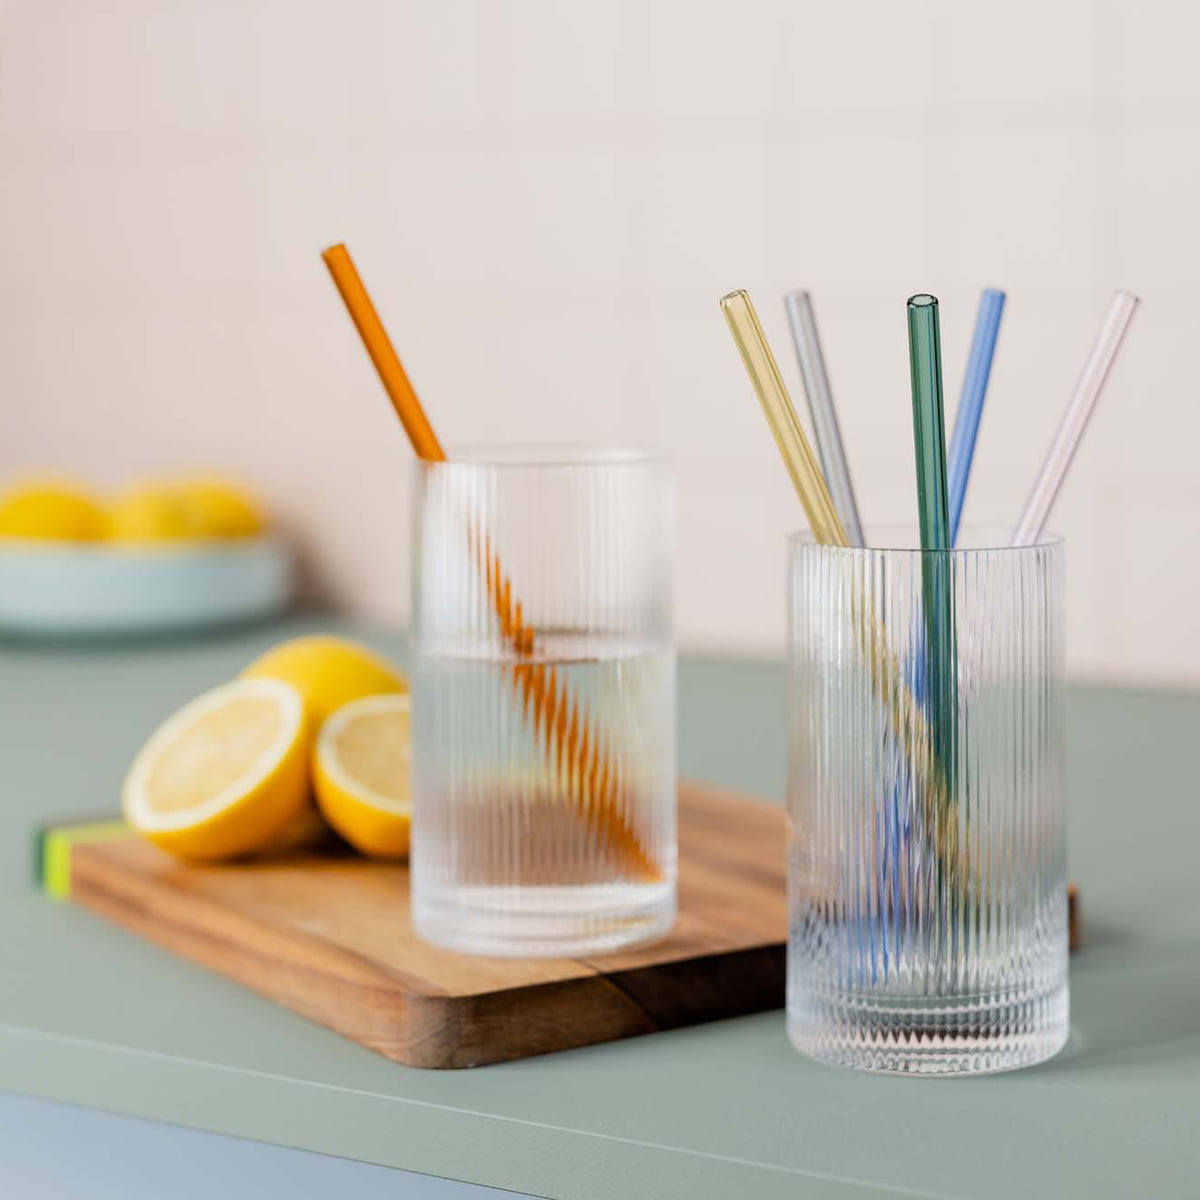 Remember - Glass drinking straws